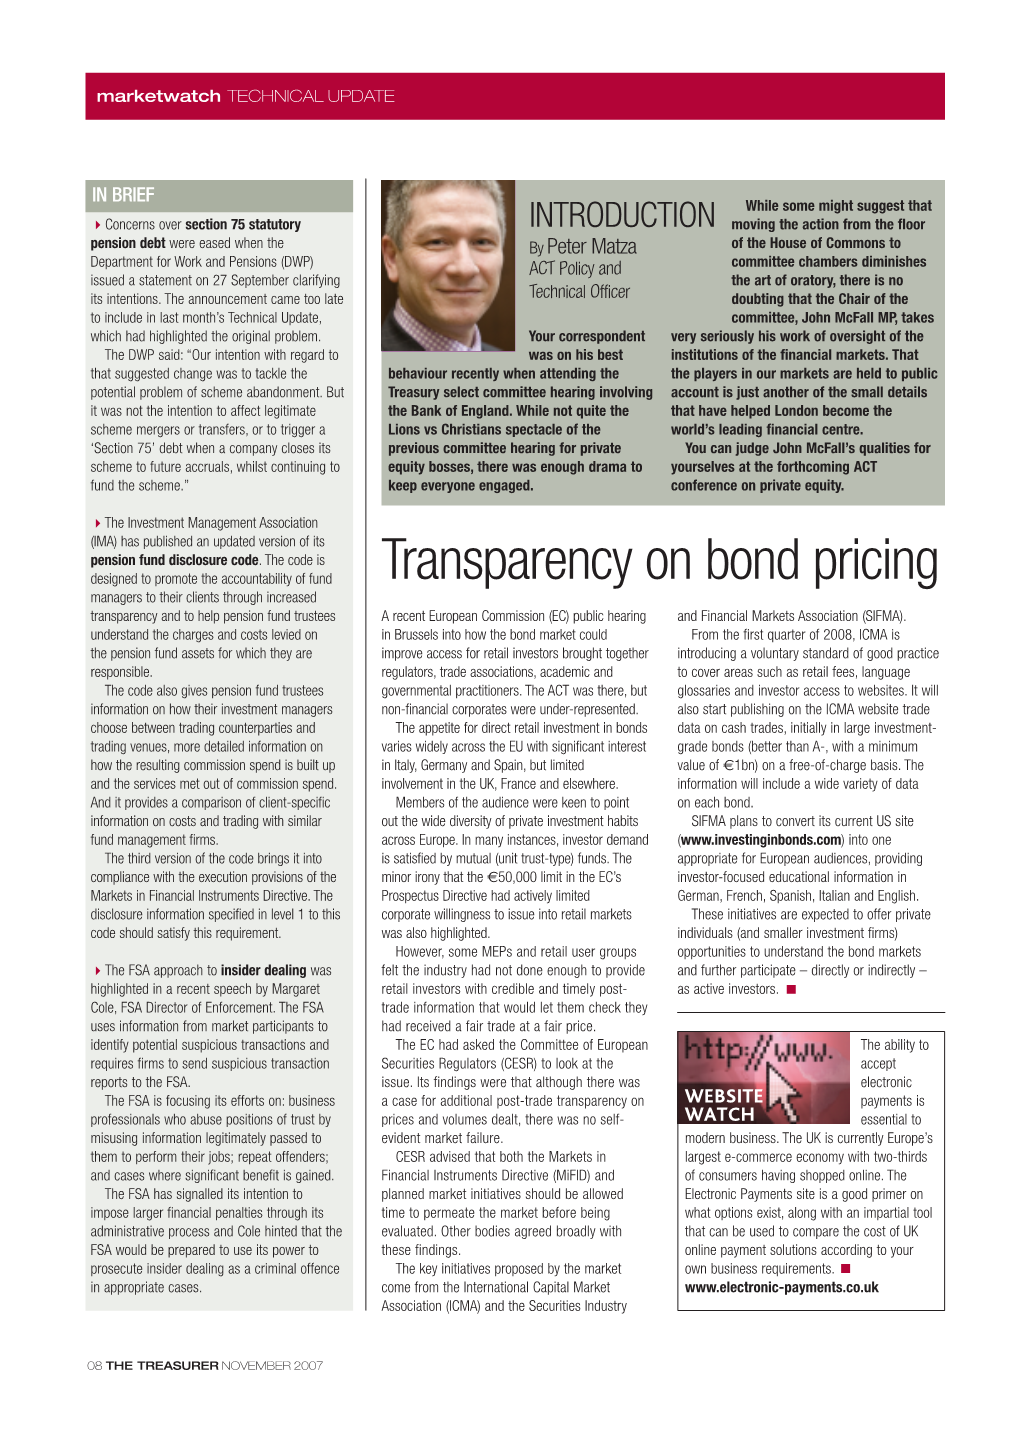 Transparency on Bond Pricing